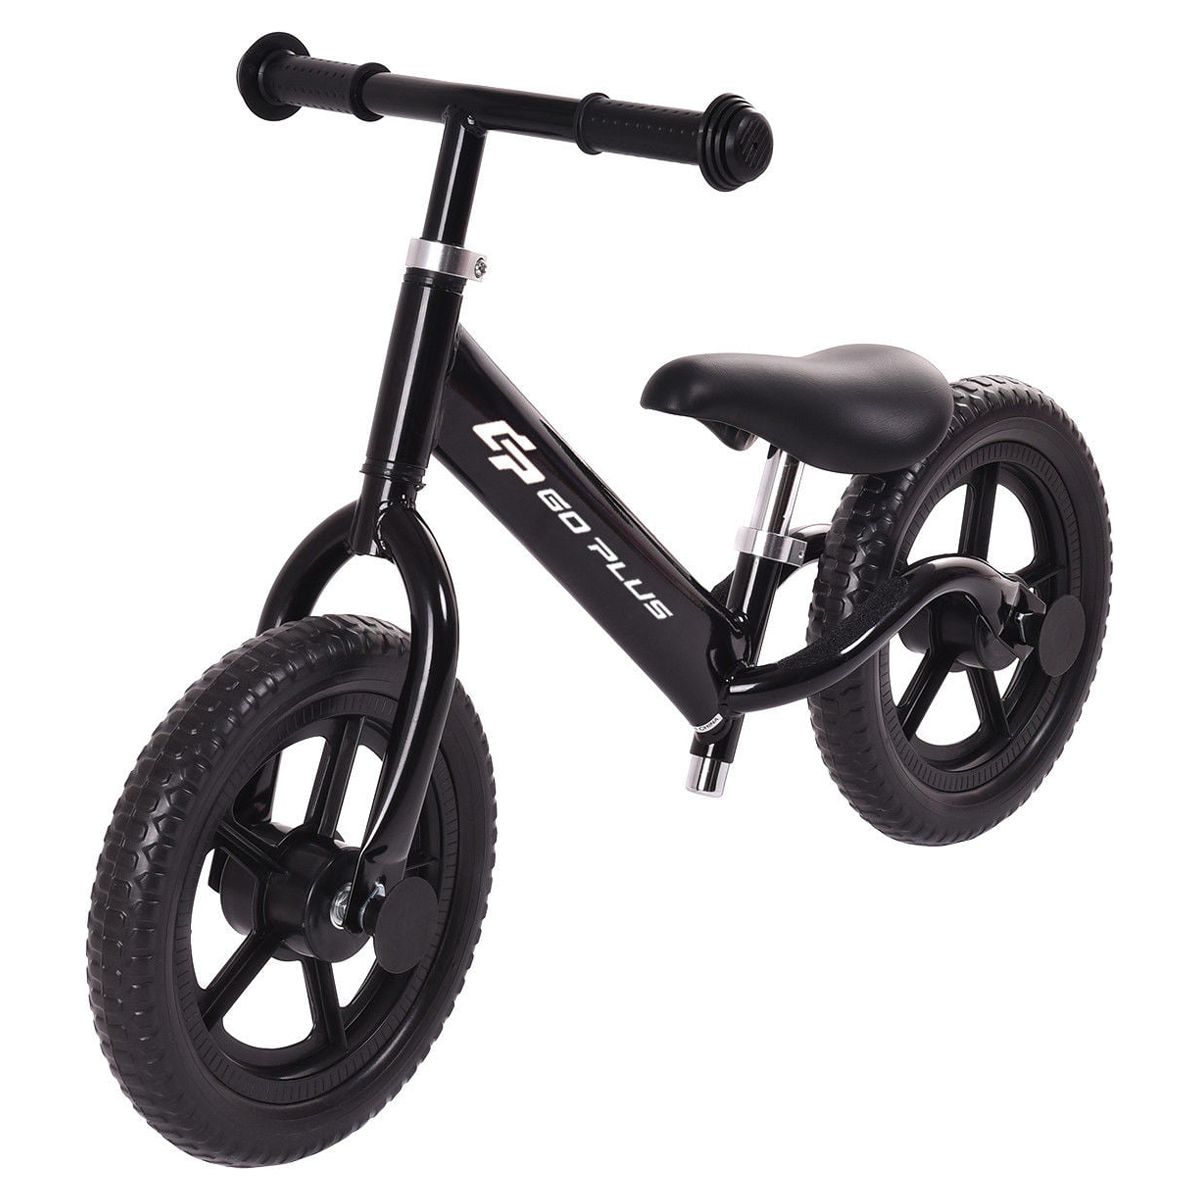 Goplus 12'' Balance Bike Classic Kids No-Pedal Learn To Ride Pre Bike w/ Adjustable Seat, Black - image 1 of 8